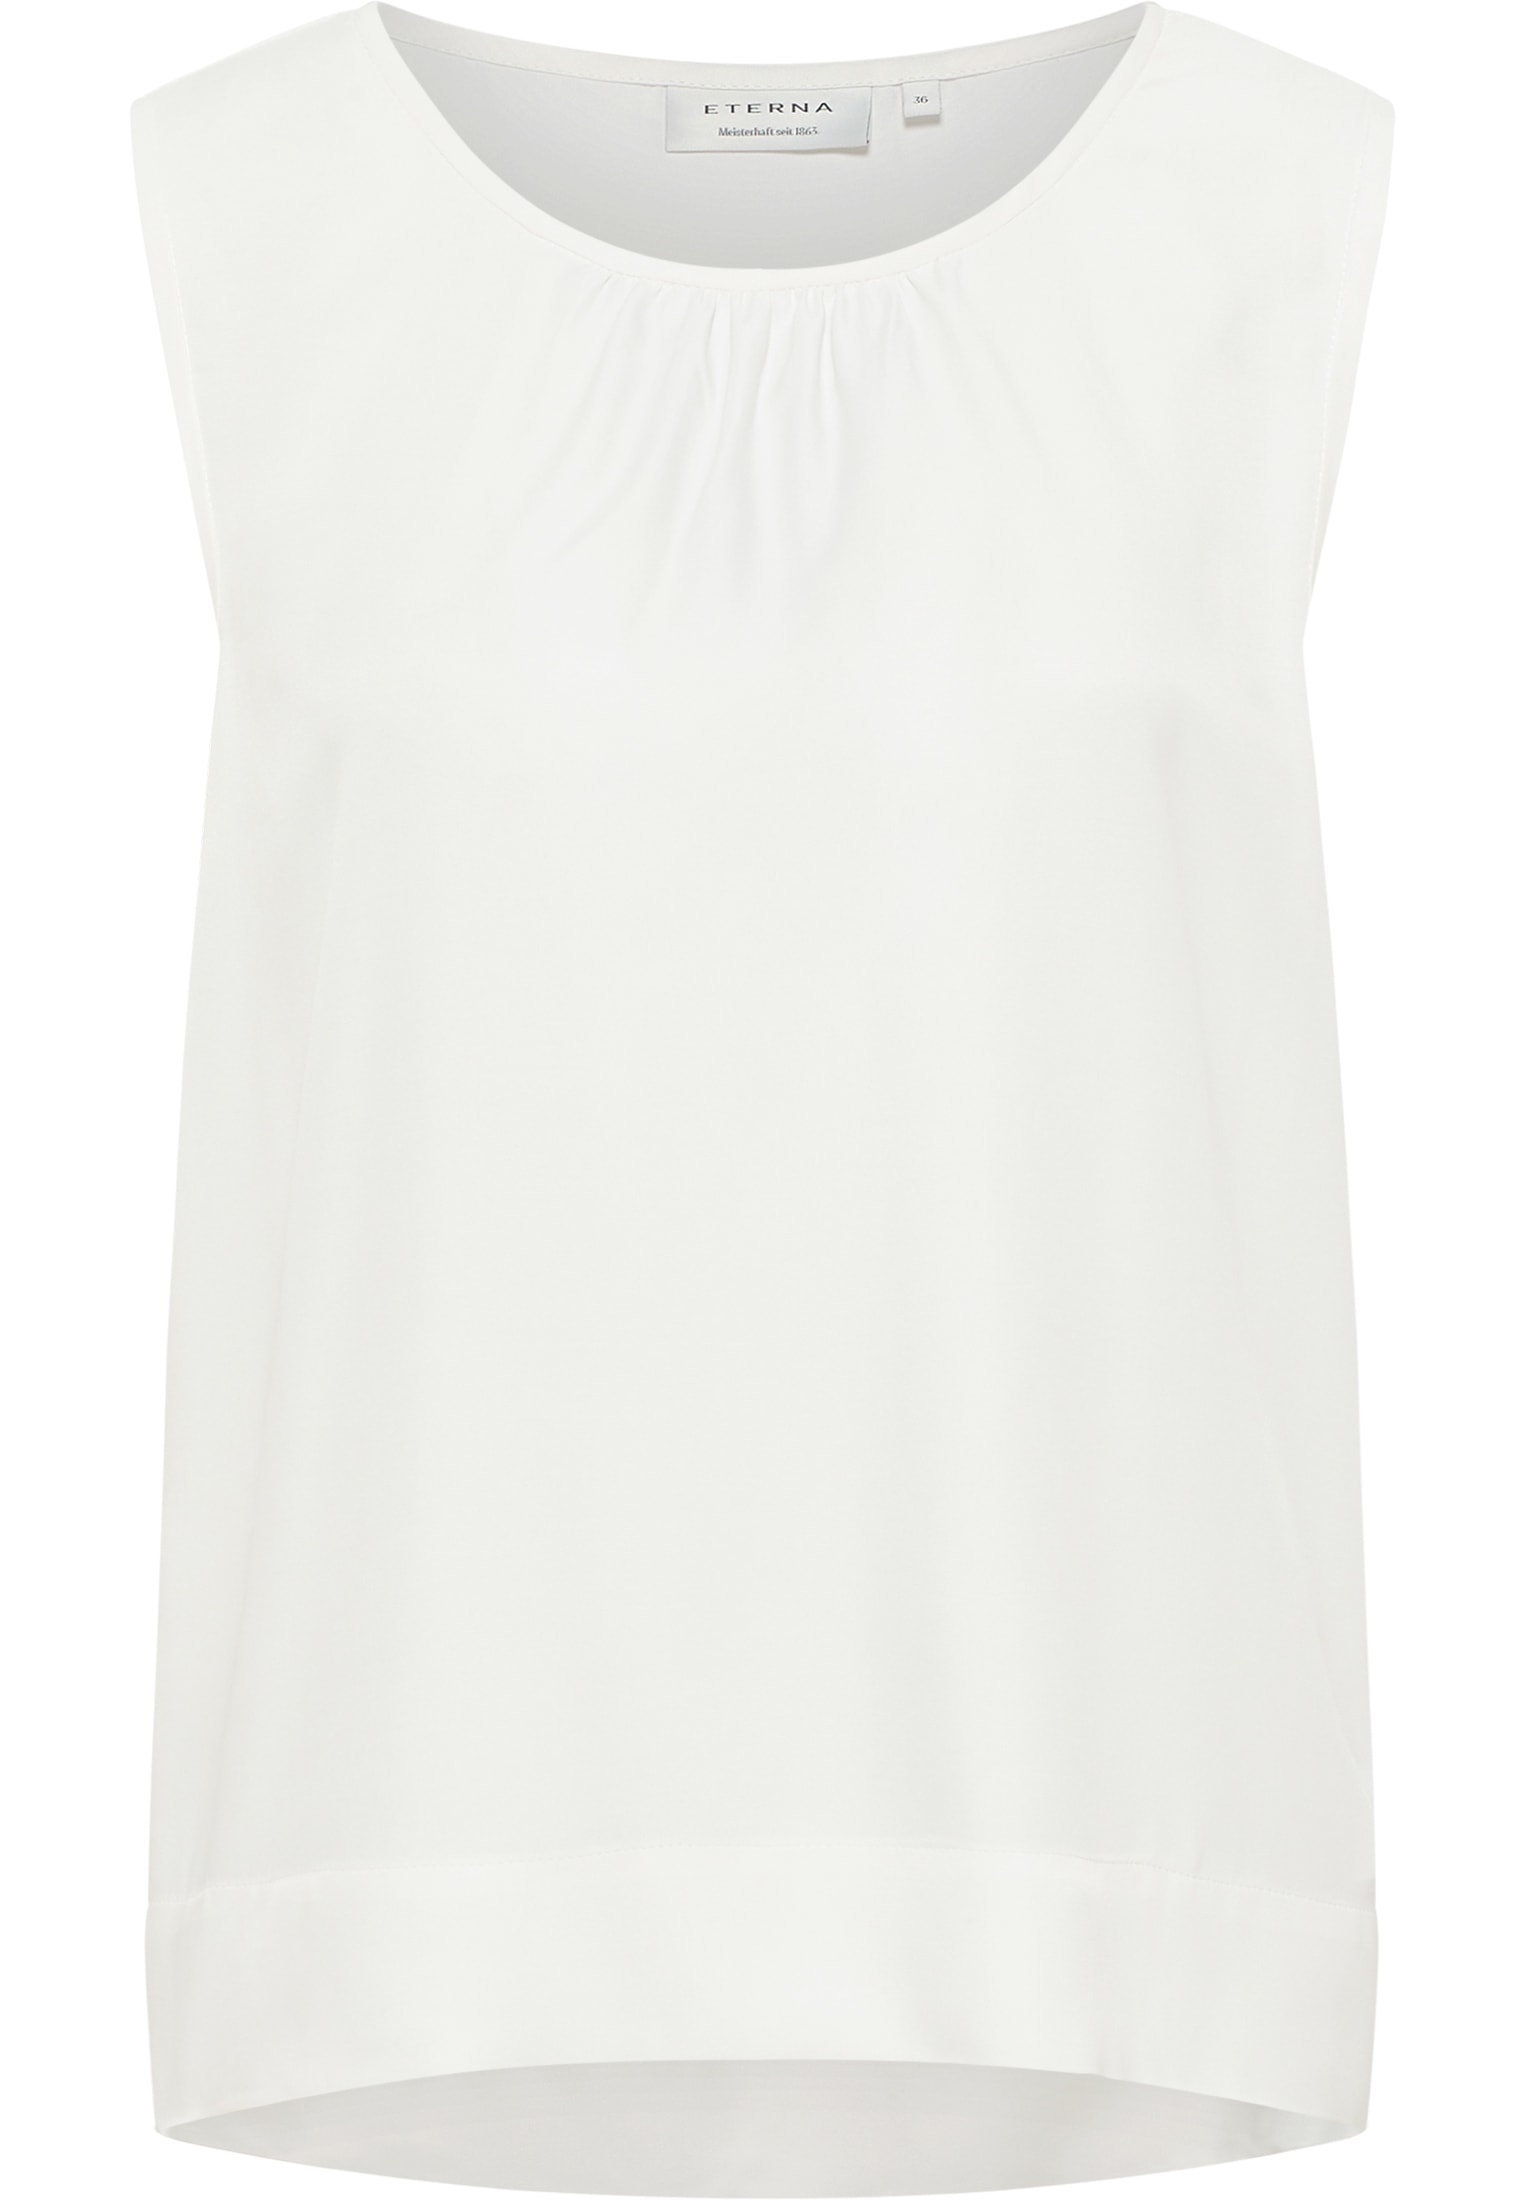 | Viscose Bluse | in | Shirt 36 off-white ohne Arm 2BL04345-00-02-36-sl | unifarben off-white